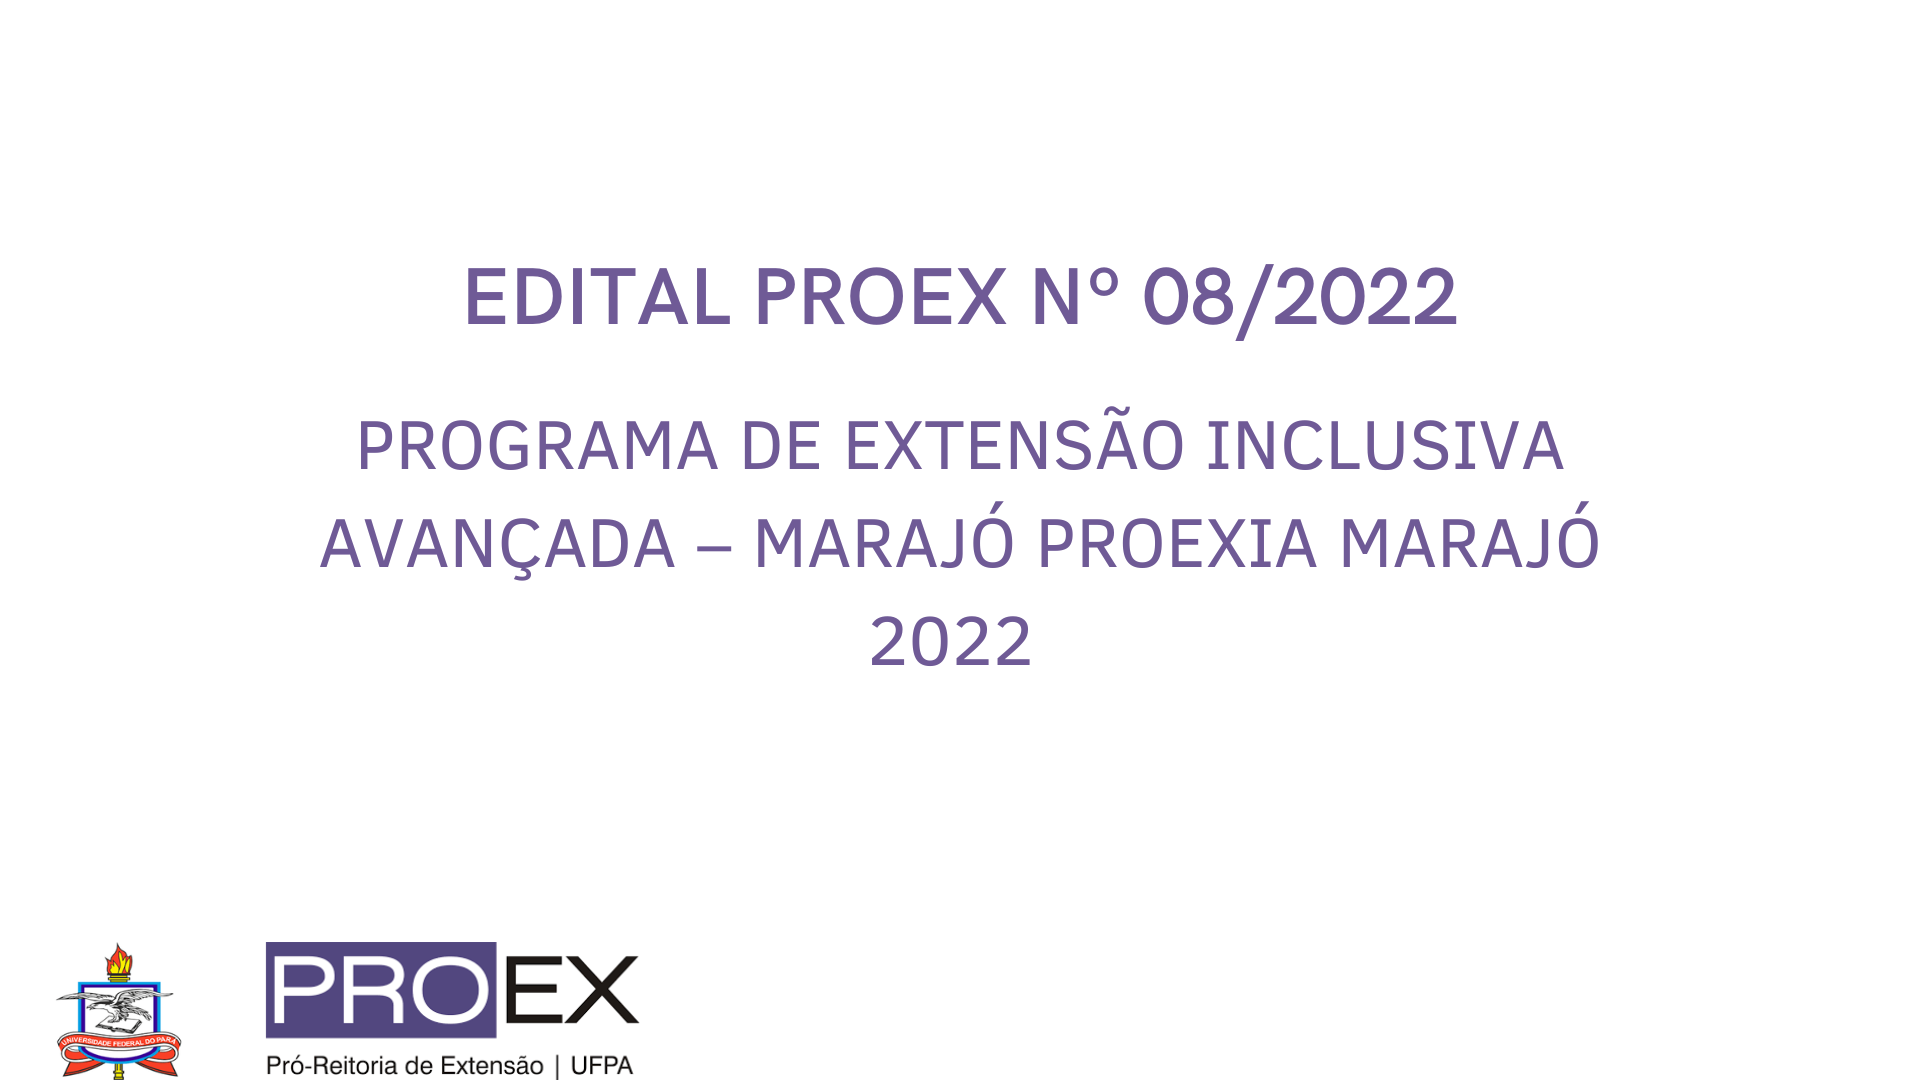 EDITAL PROGRAMA DE EXTENSÃO INCLUSIVA AVANÇADA – PROEXIA  MARAJÓ - 2022